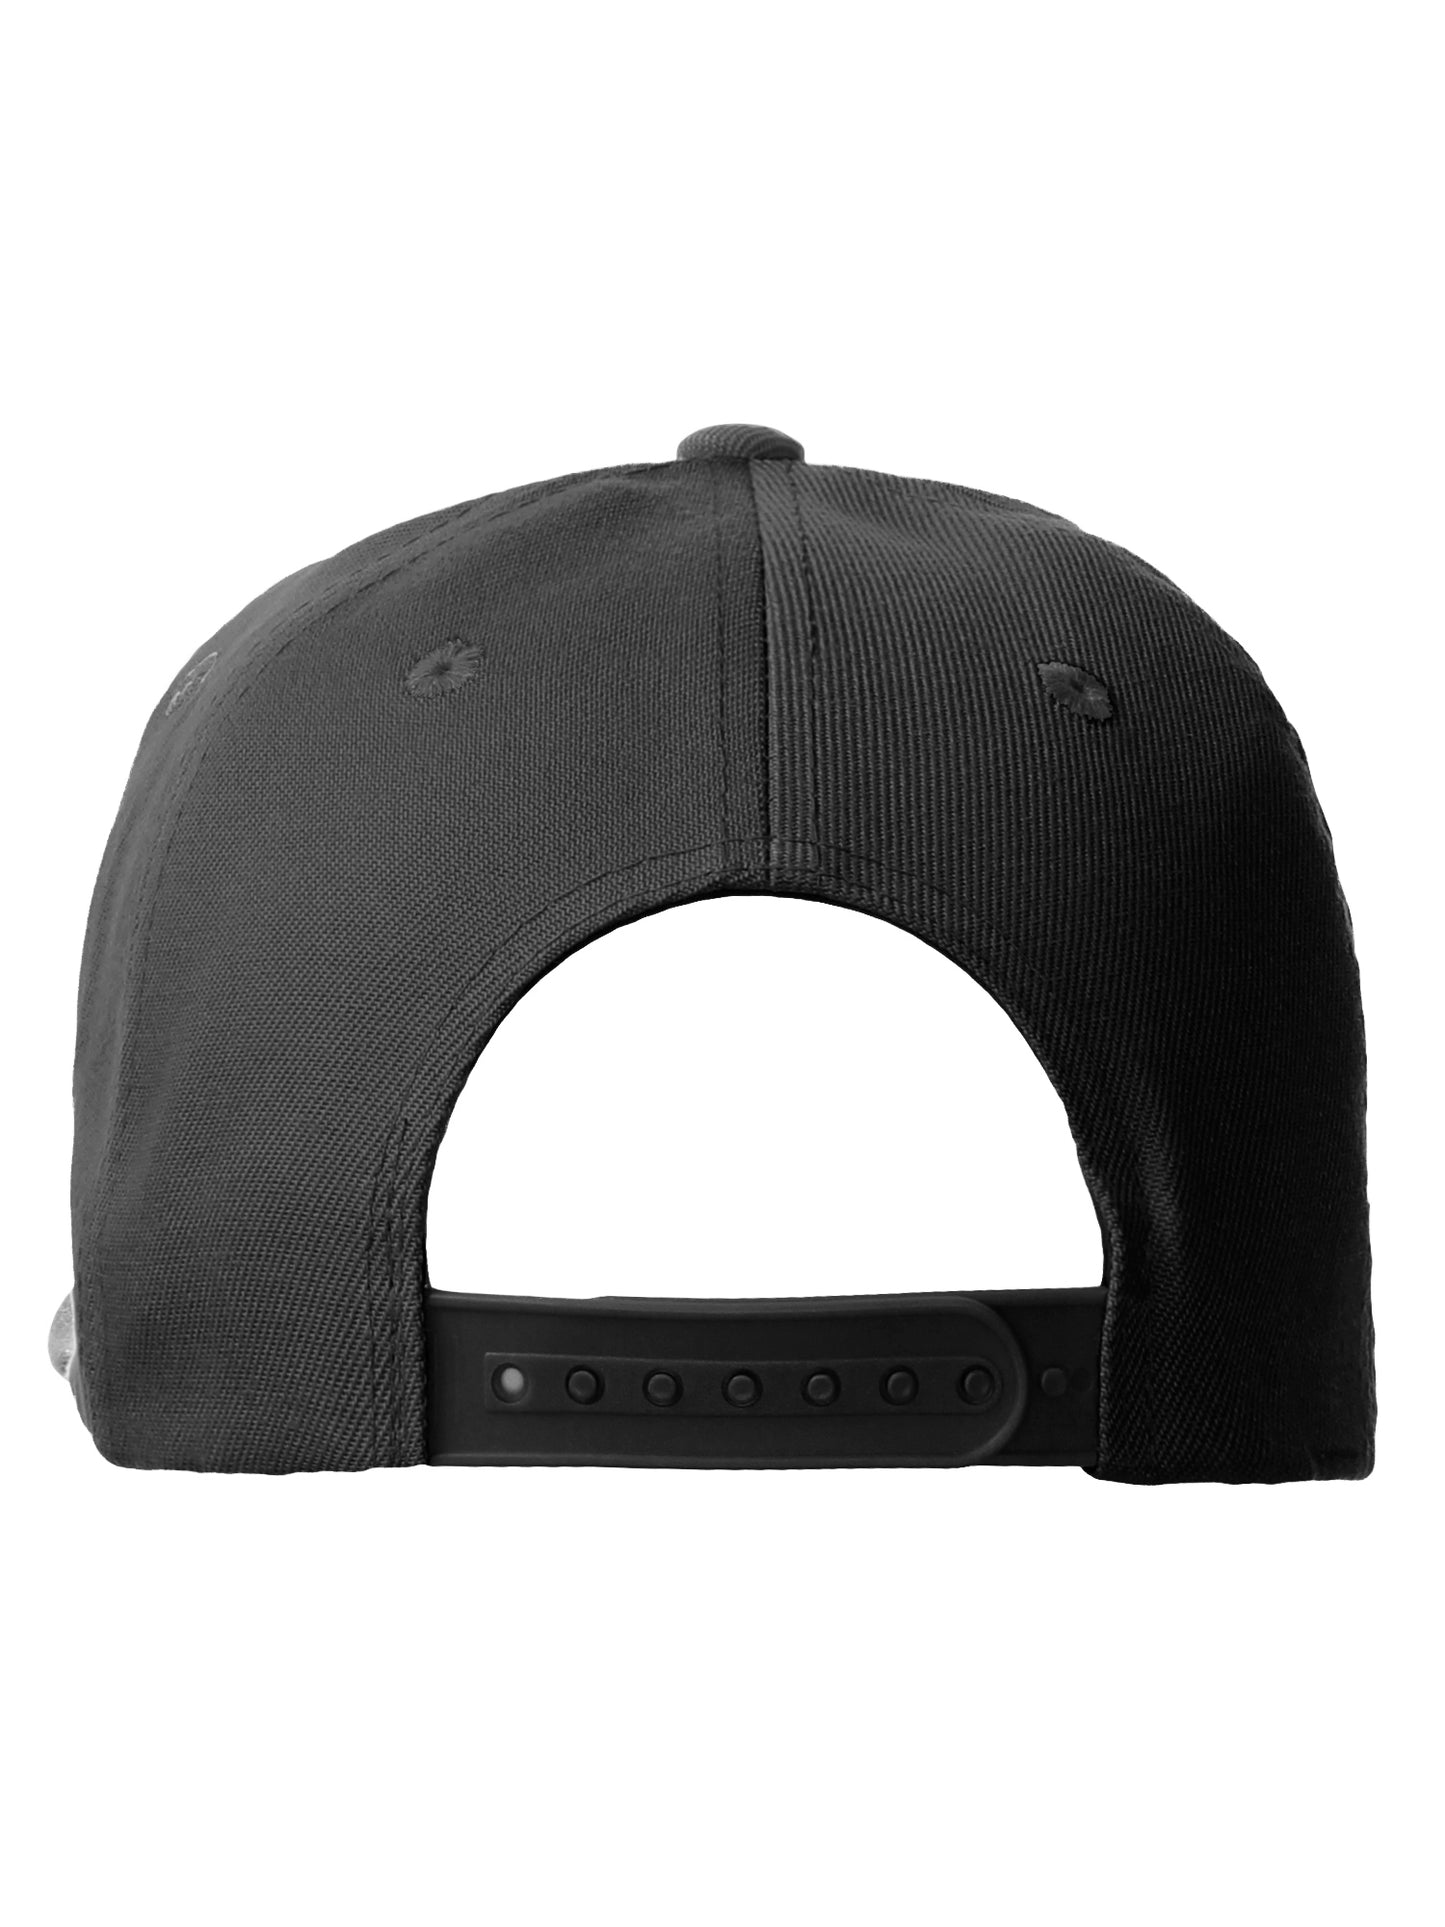 Classic Snapback Referee Hat High Profile Flat Bill Visor Adjustable Back Cap